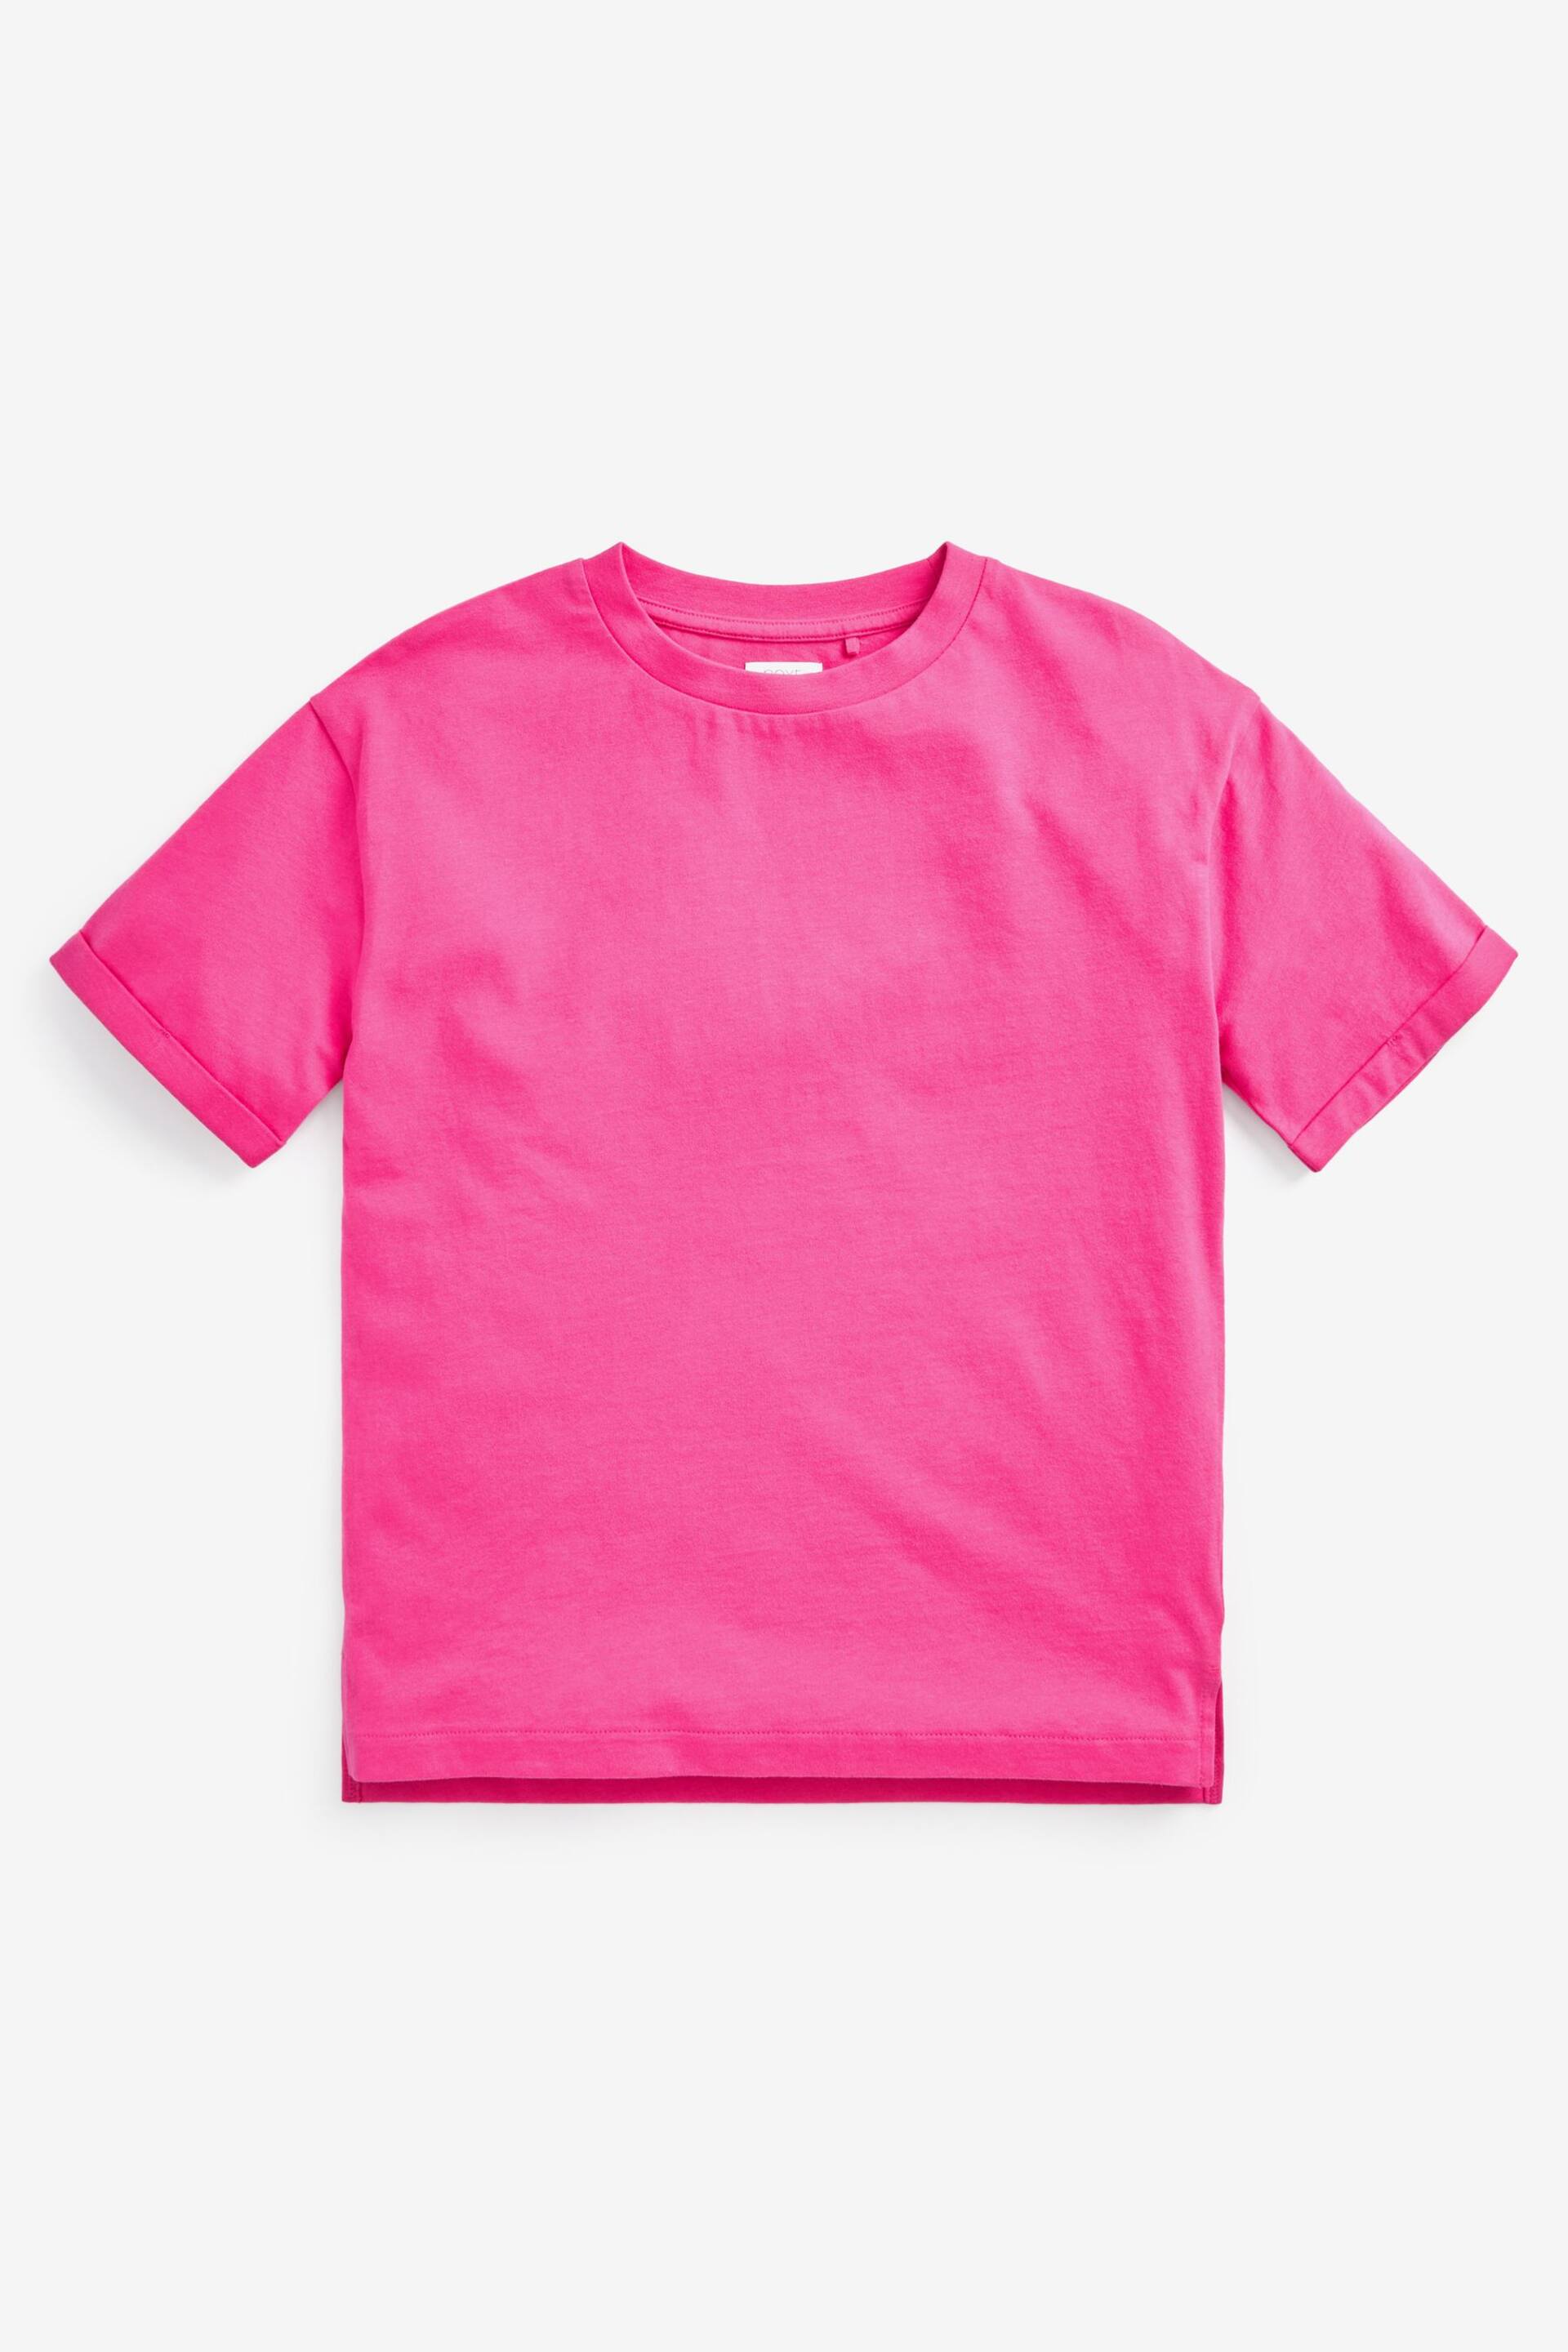 Magenta Pink Oversized T-Shirt (3-16yrs) - Image 5 of 7